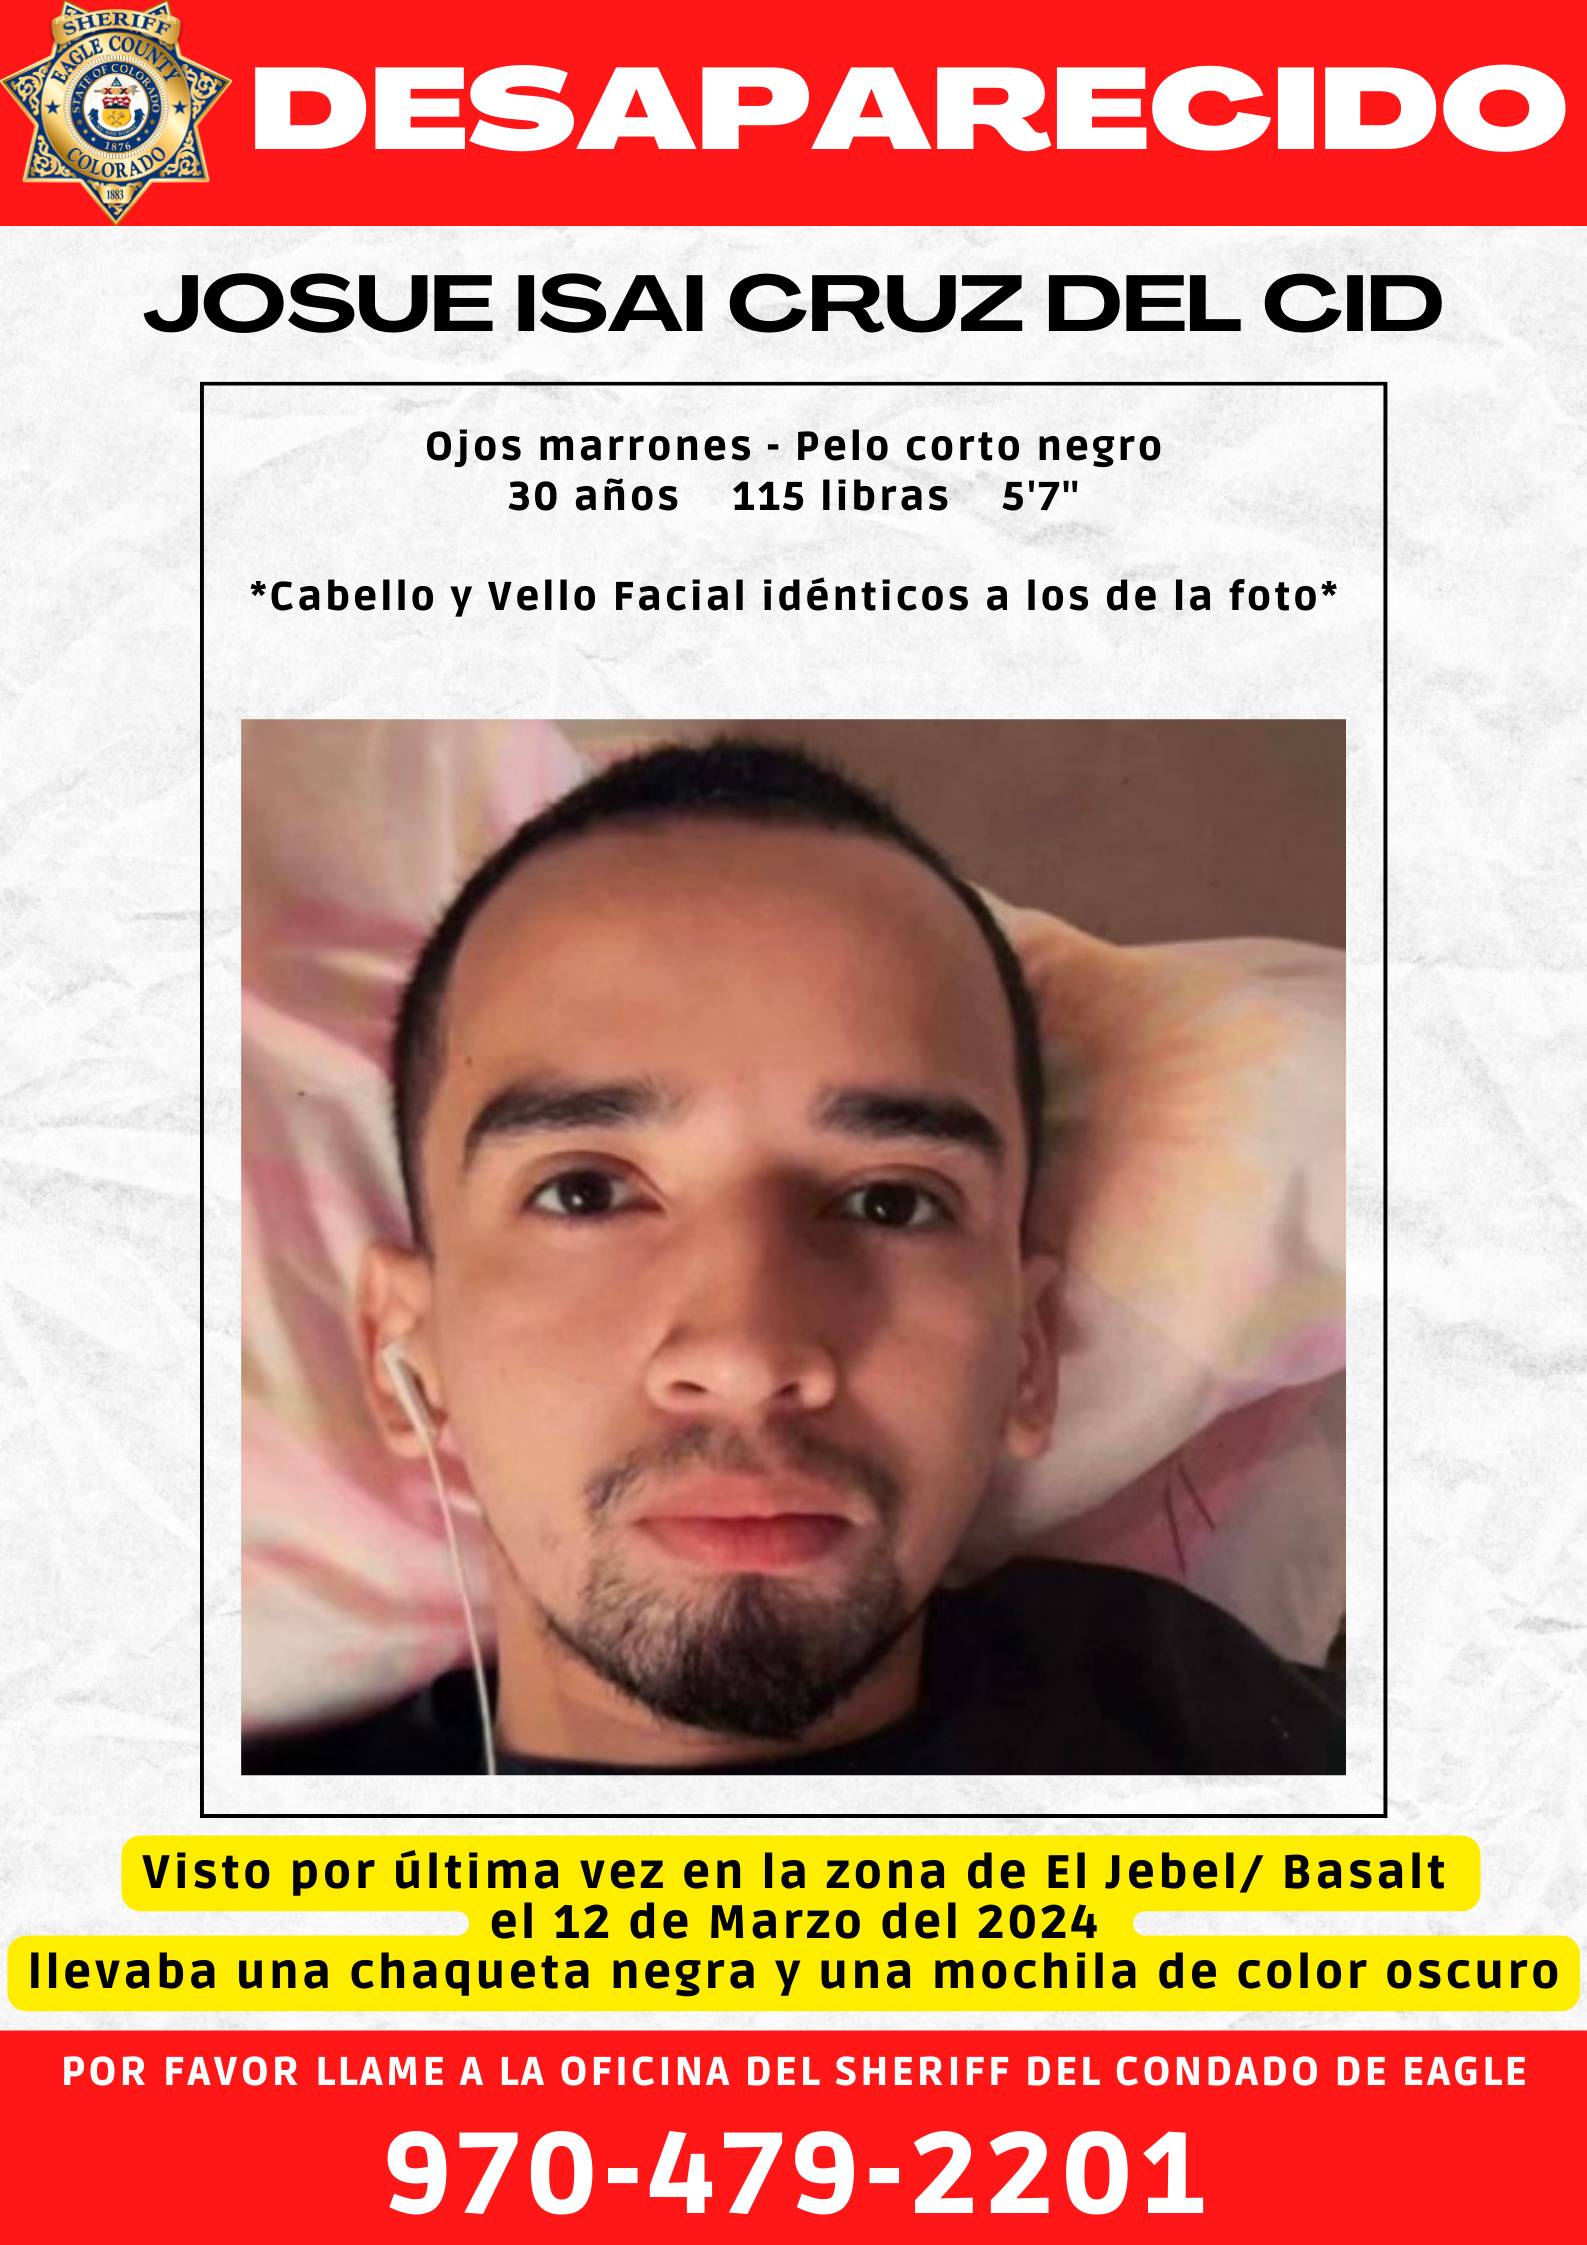 Josue Isai Cruz Del Cid Missing Poster in Spanish